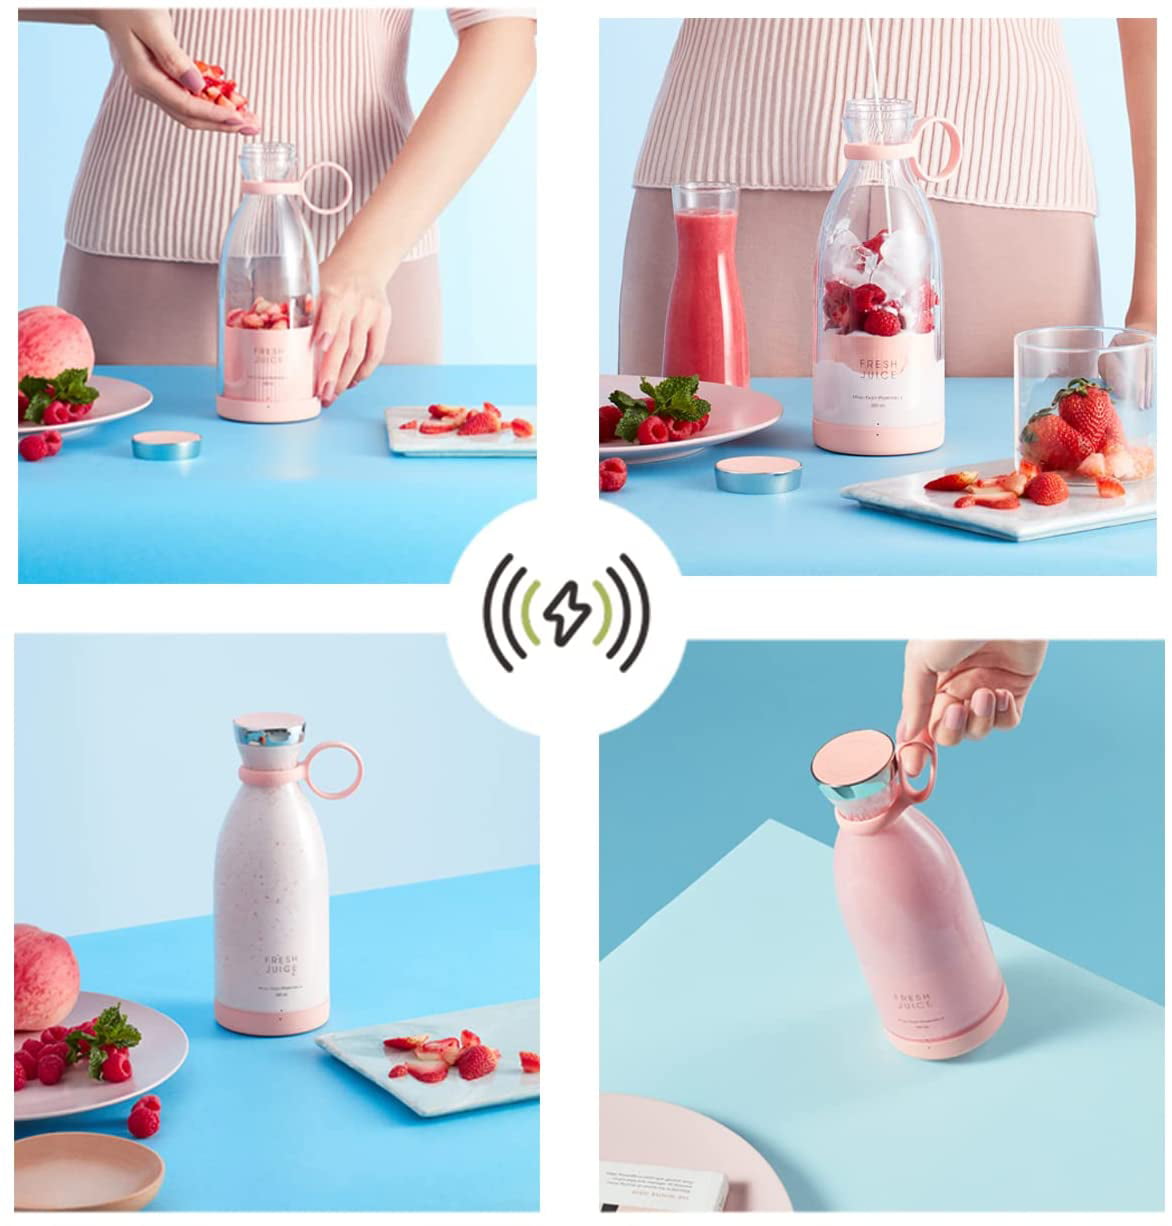 Portable Electric Mini Smoothie Blender Fruit Maker/Mixer Protein Shake Bottle, Size: Item Weight: ‎408 G, Pink